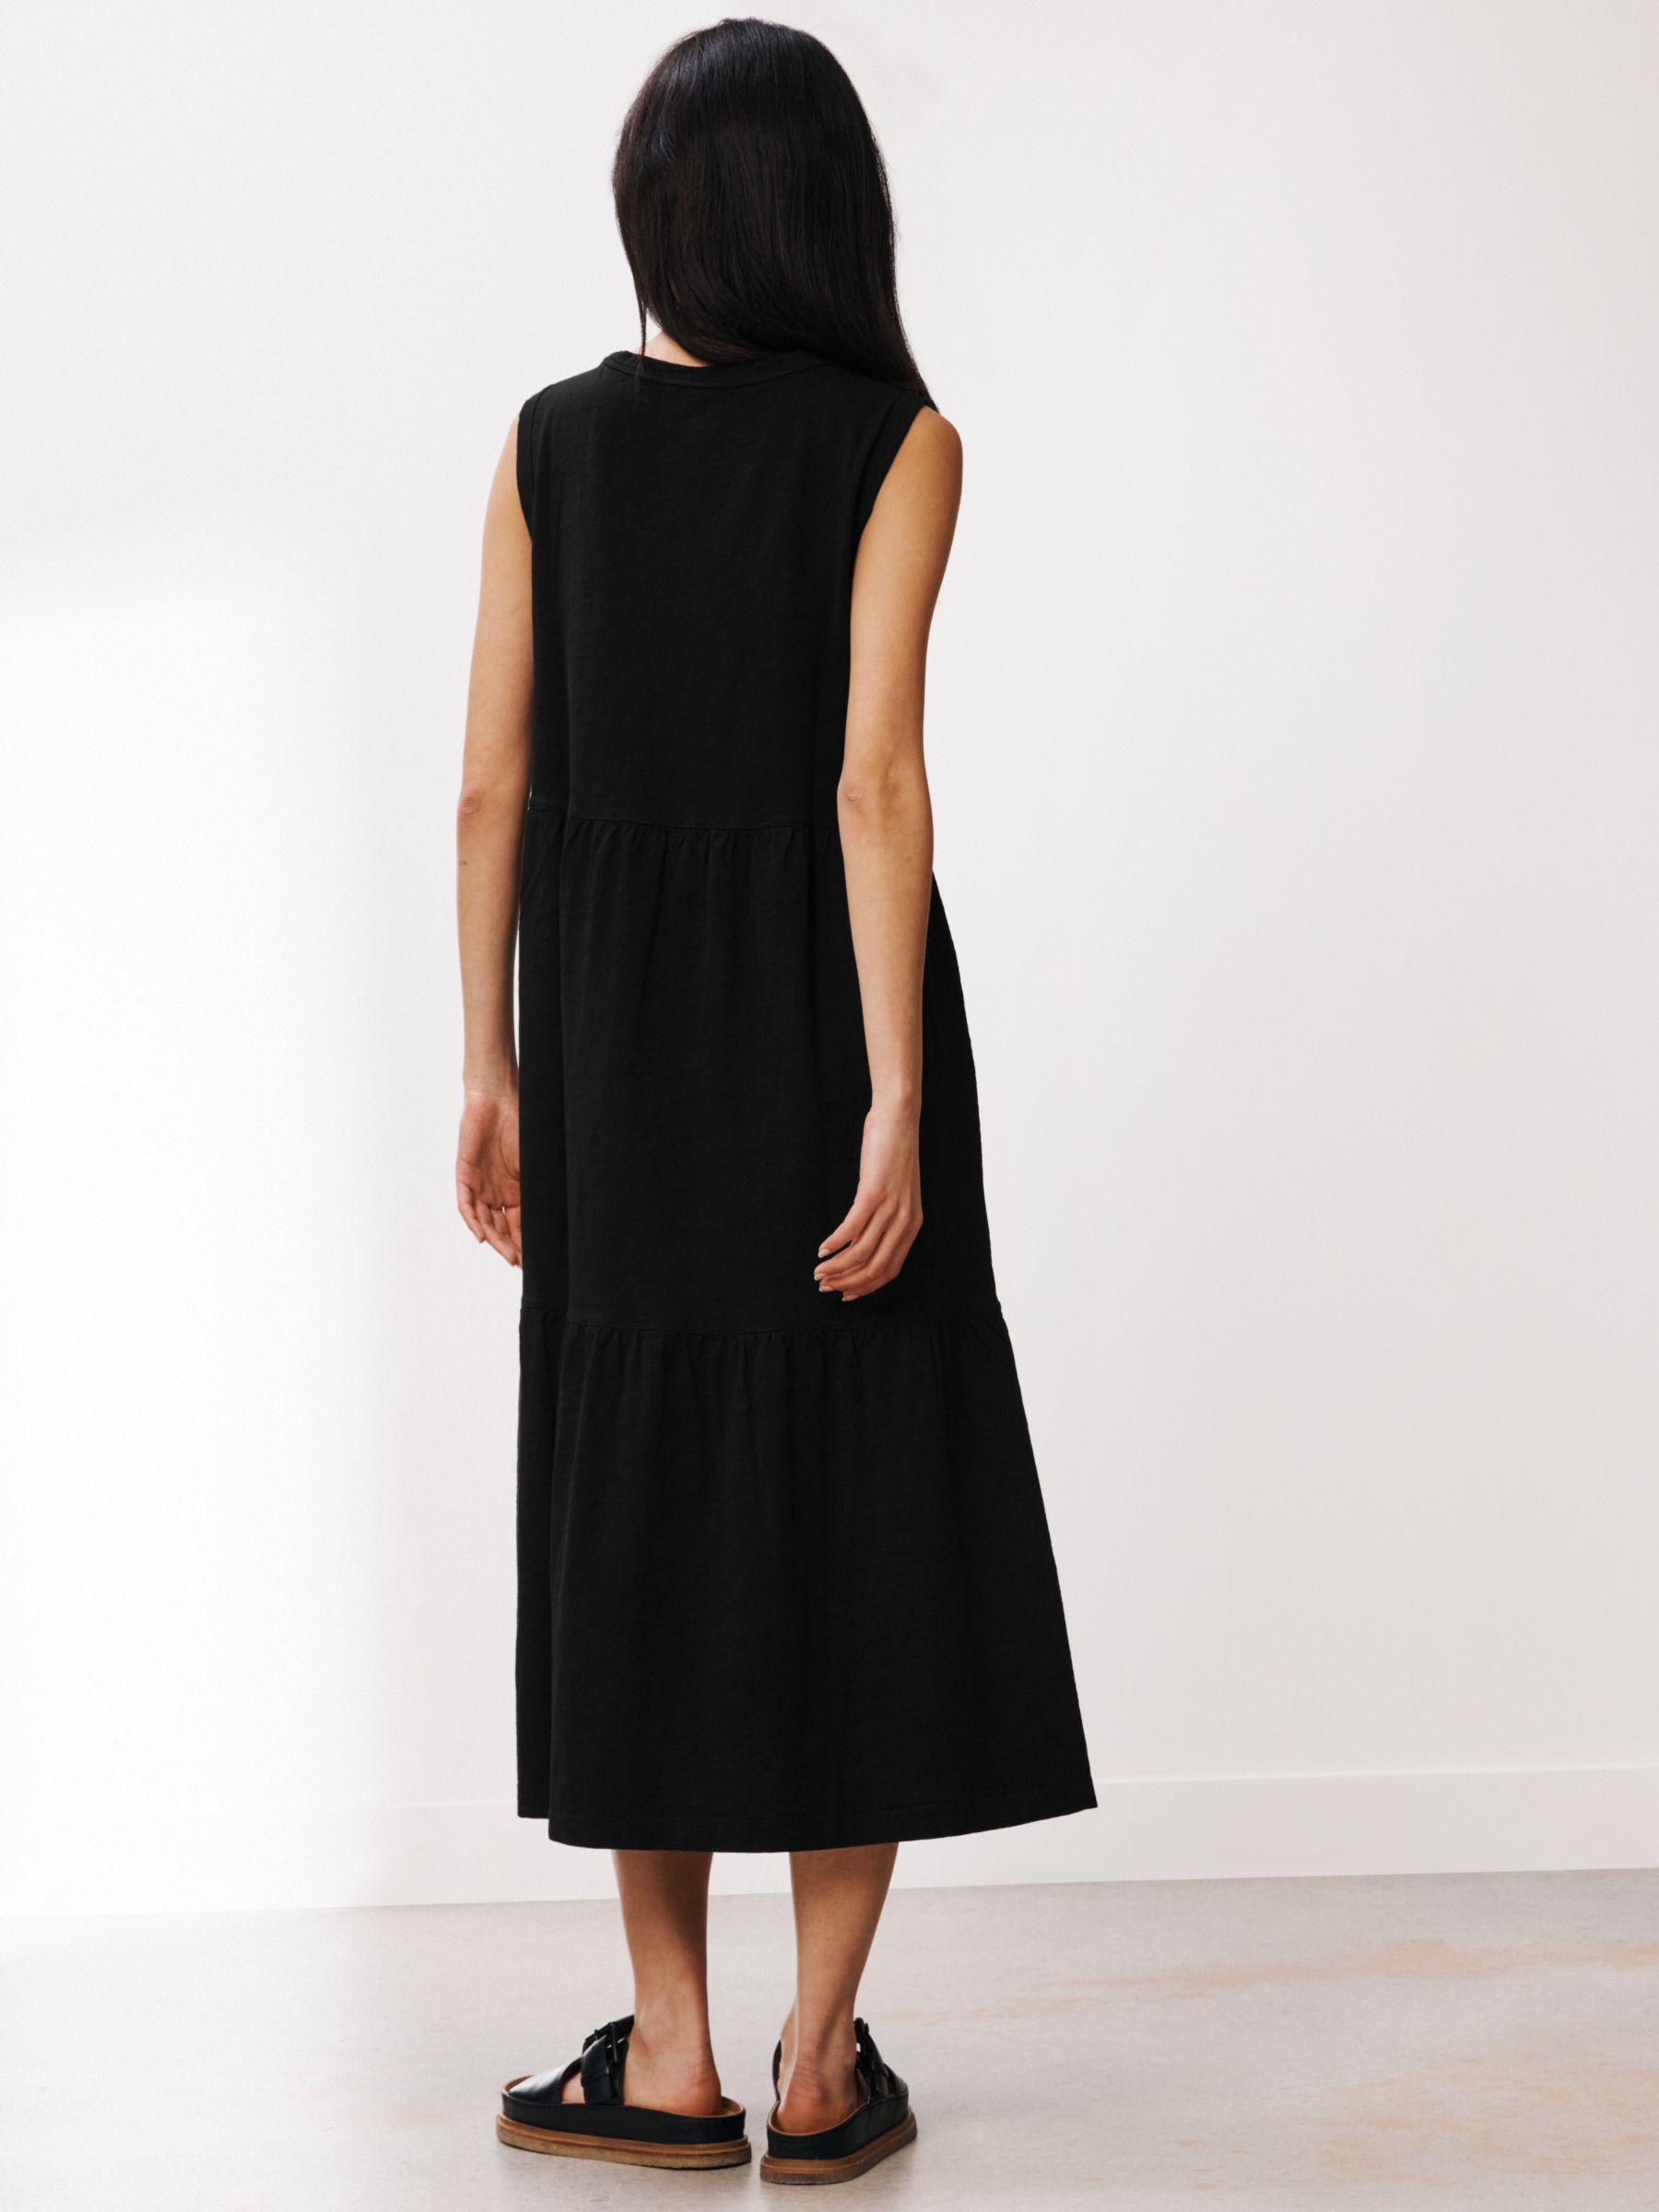 AND/OR Bernie Sleeveless Jersey Dress, Black, 6